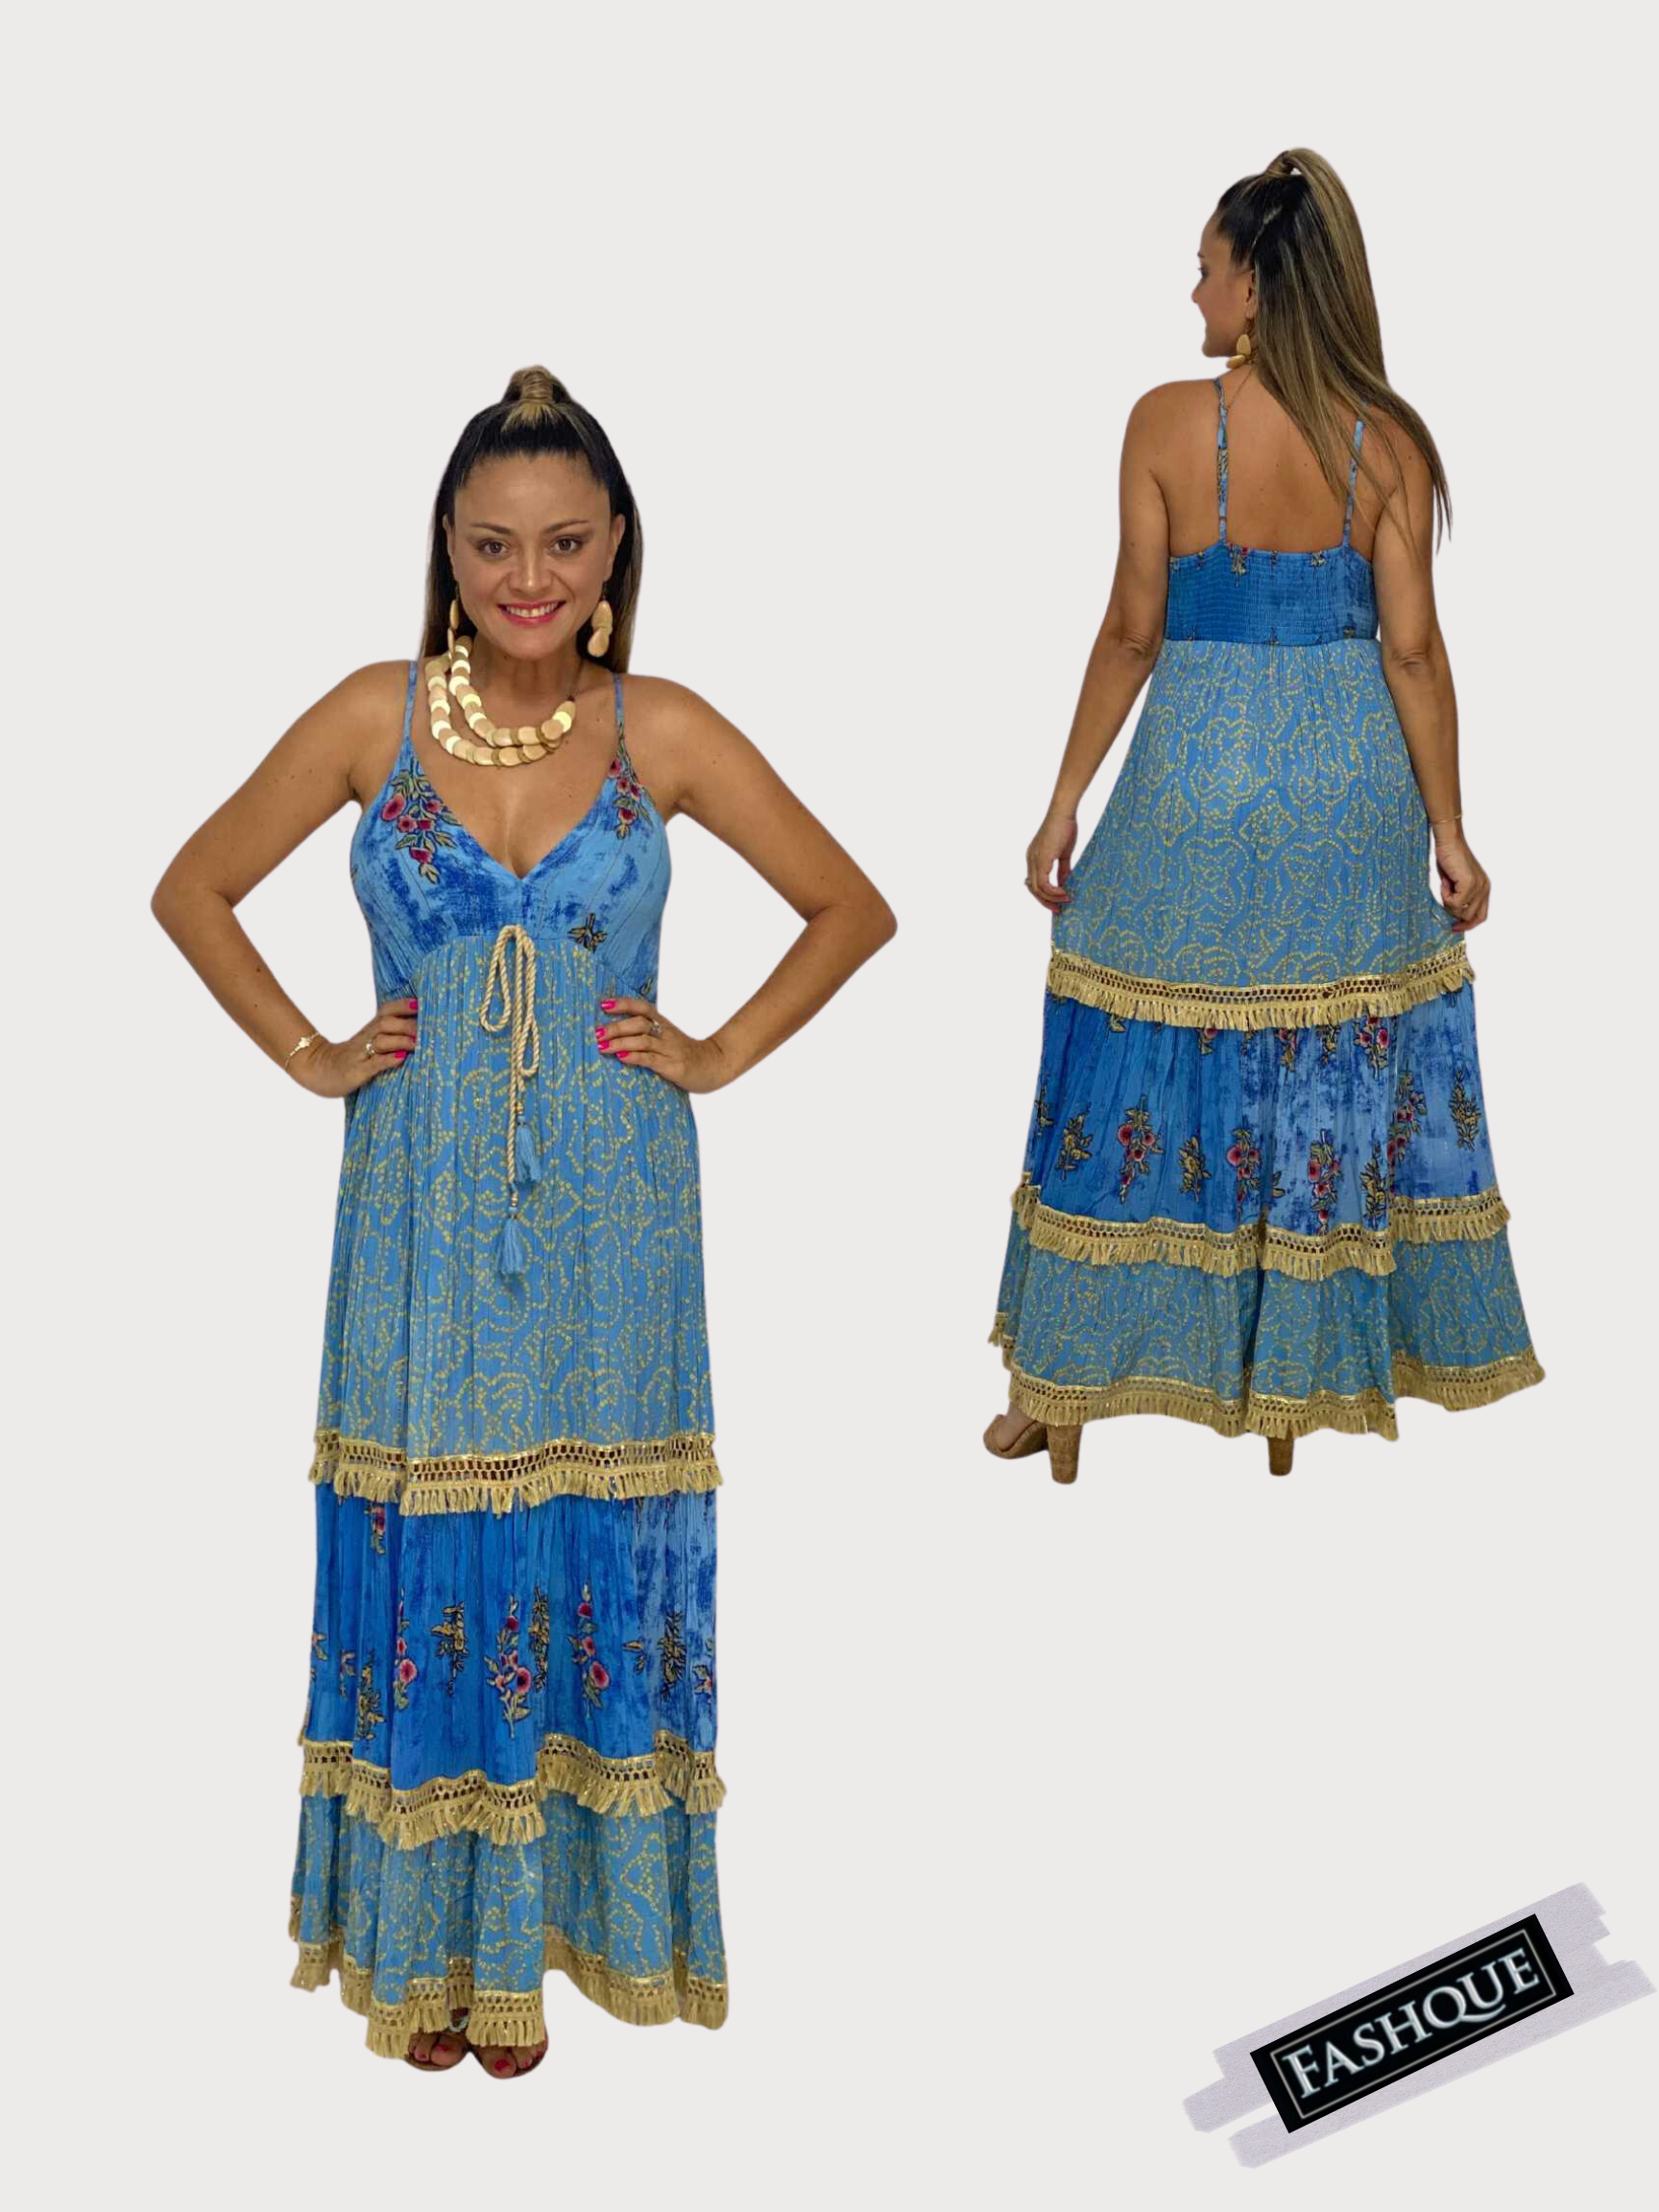 FASHQUE - Spaghetti Strap long flowy printed dresses for Women - D10574